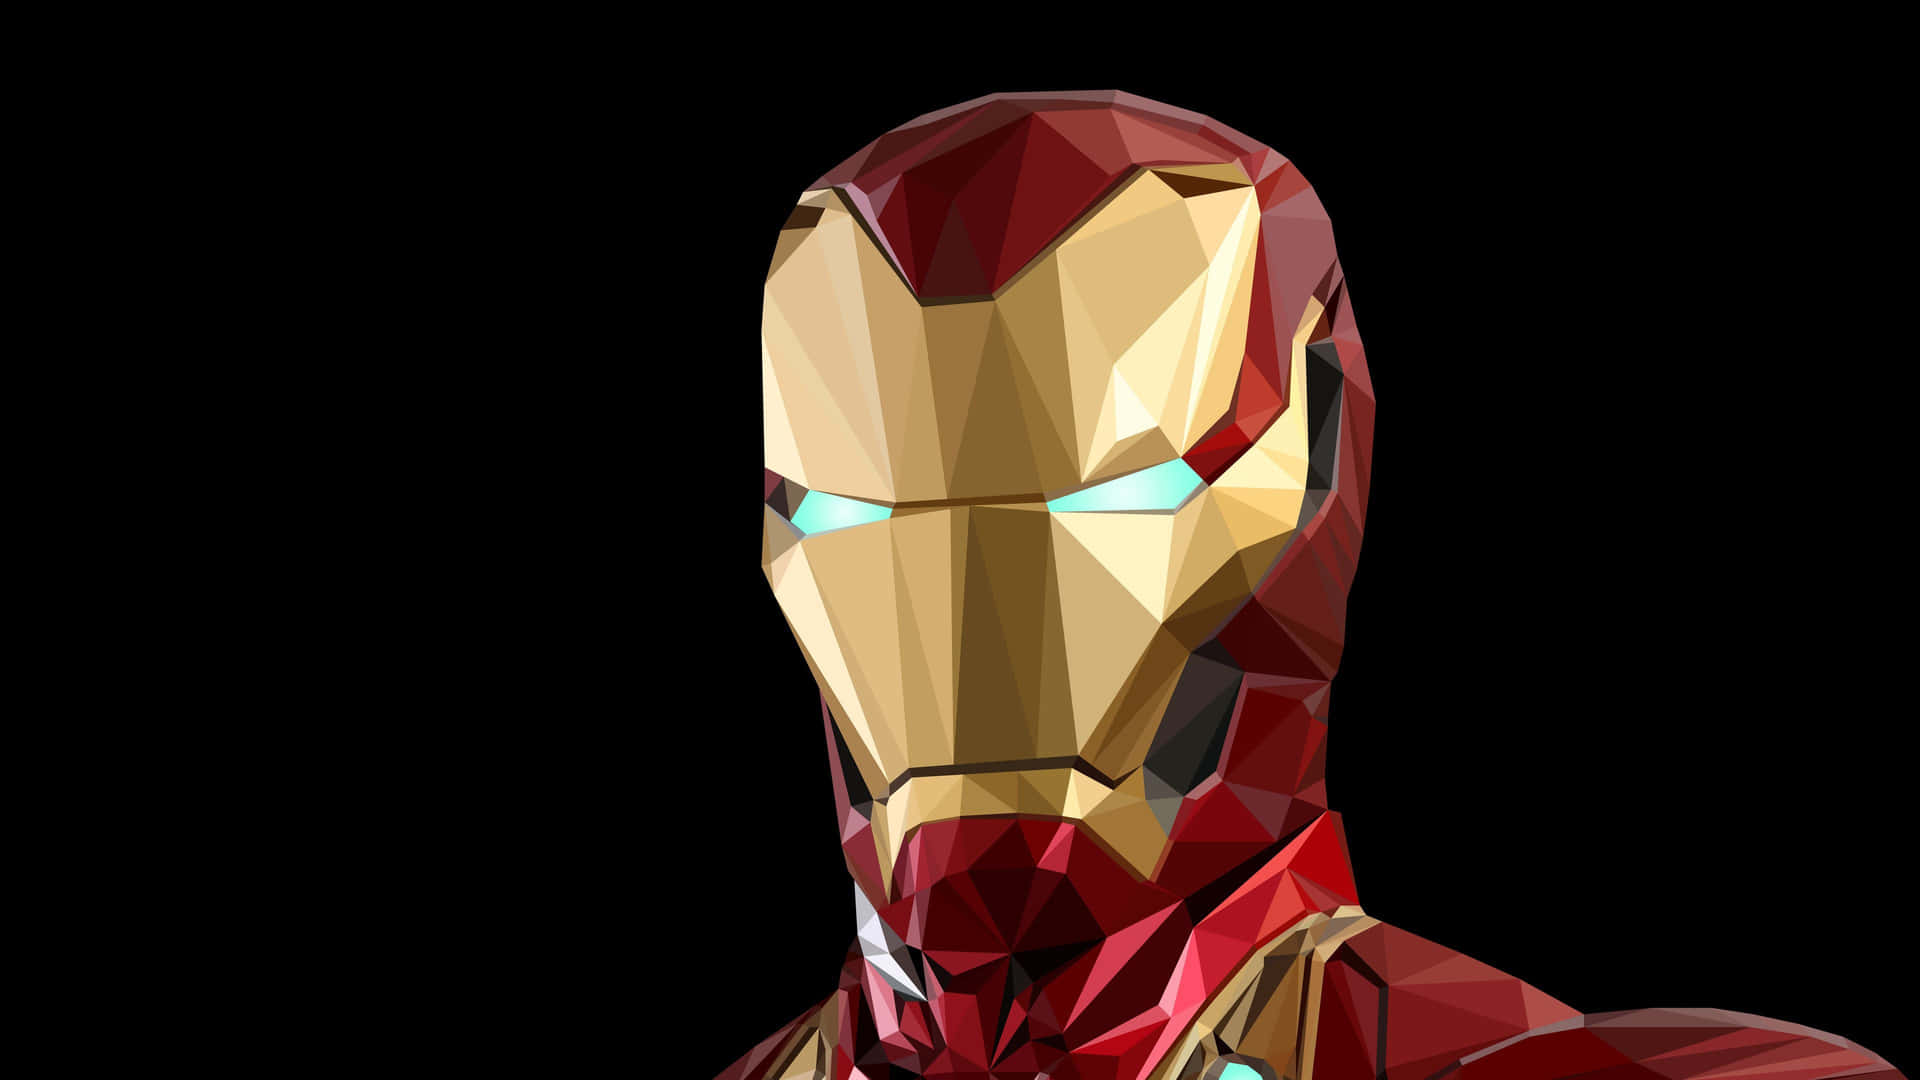 Hdoled Iron Man Bakgrundsbild.